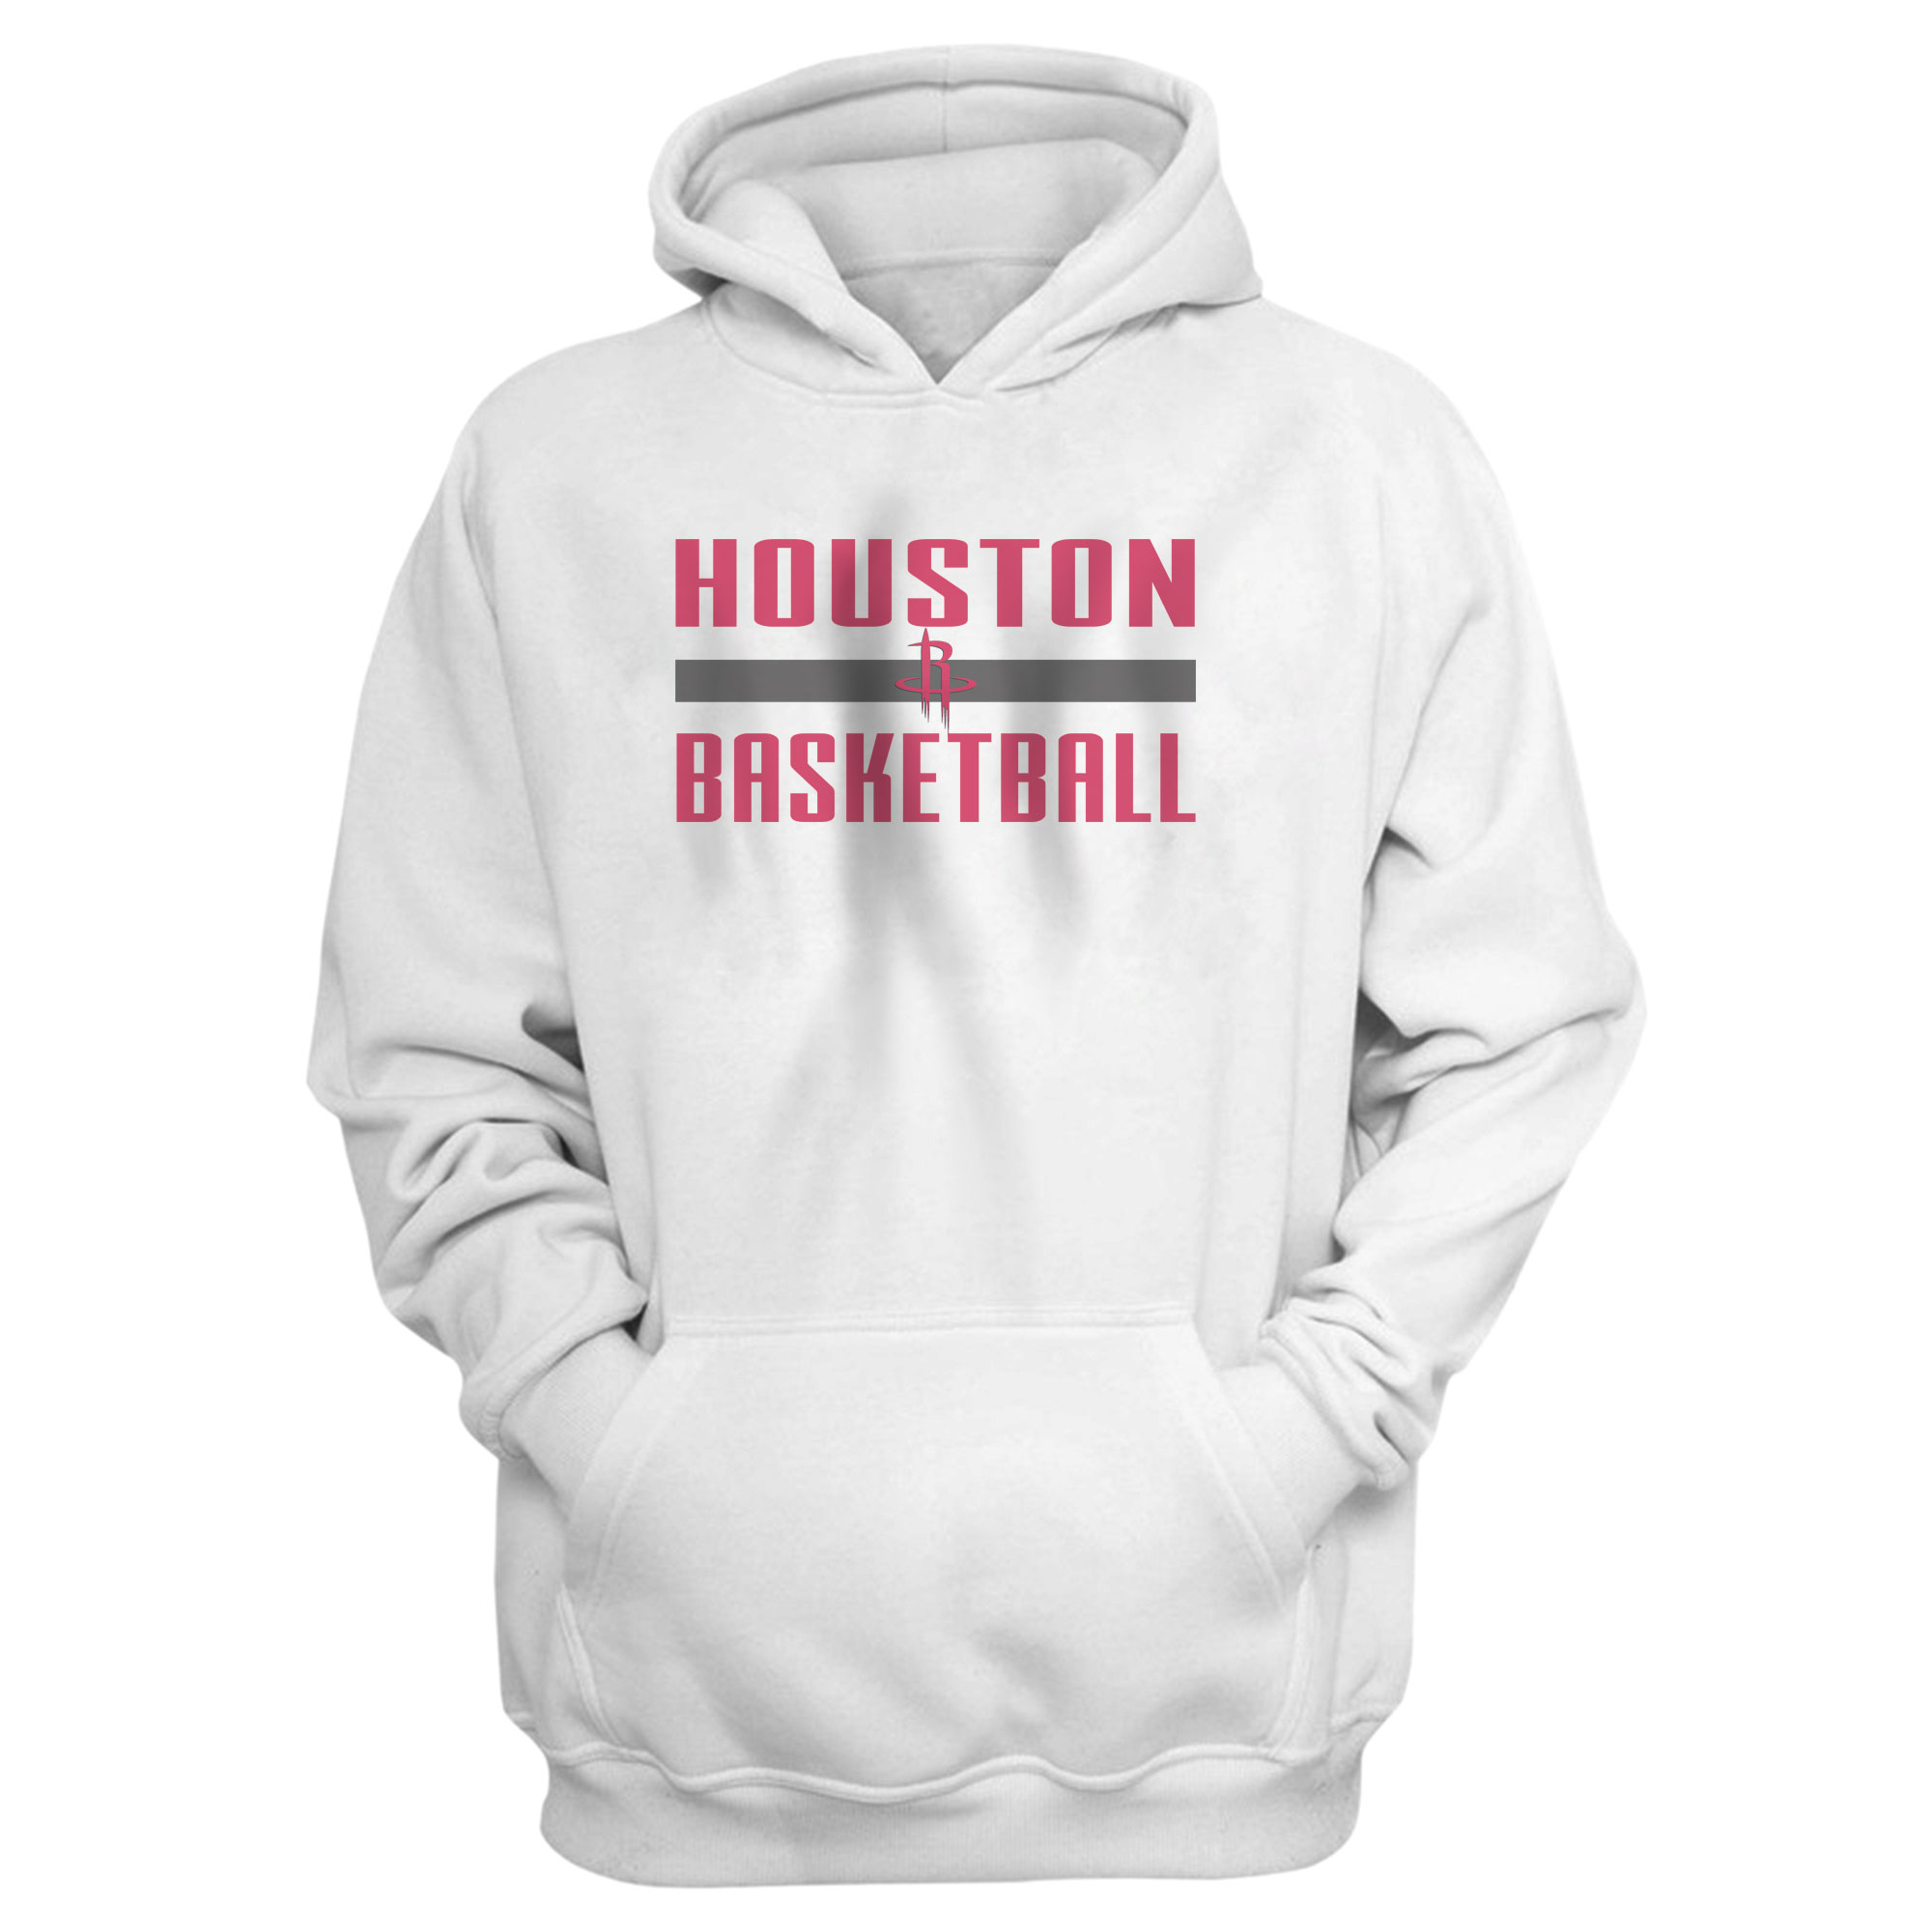 Houston Basketball Hoodie (HD-WHT-706)